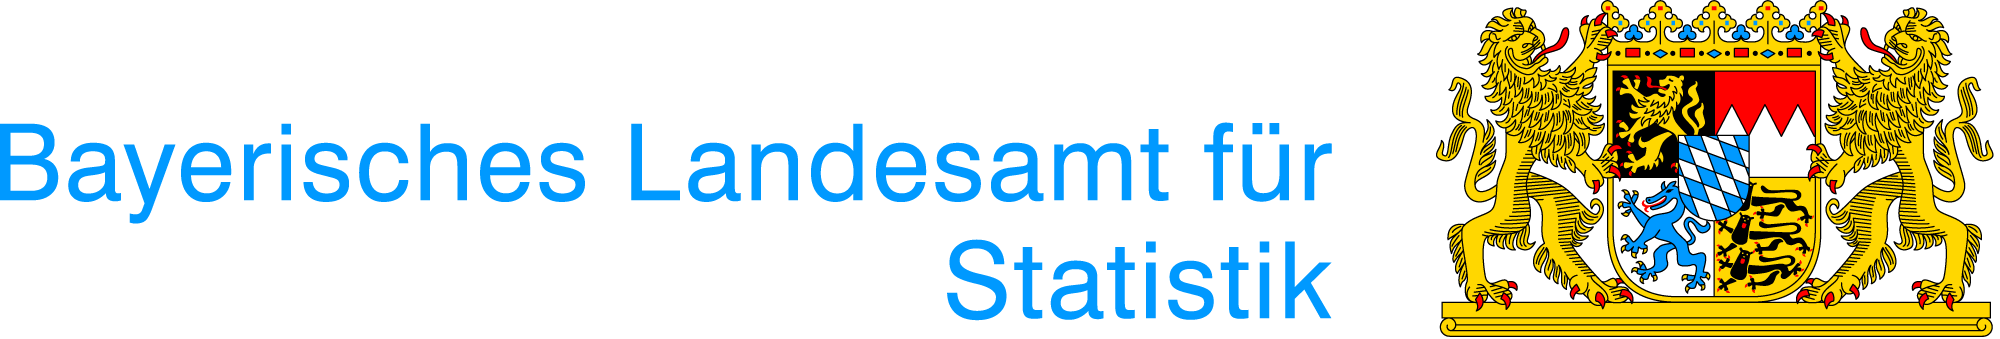 Logo Bay. Landesamt für Statistik